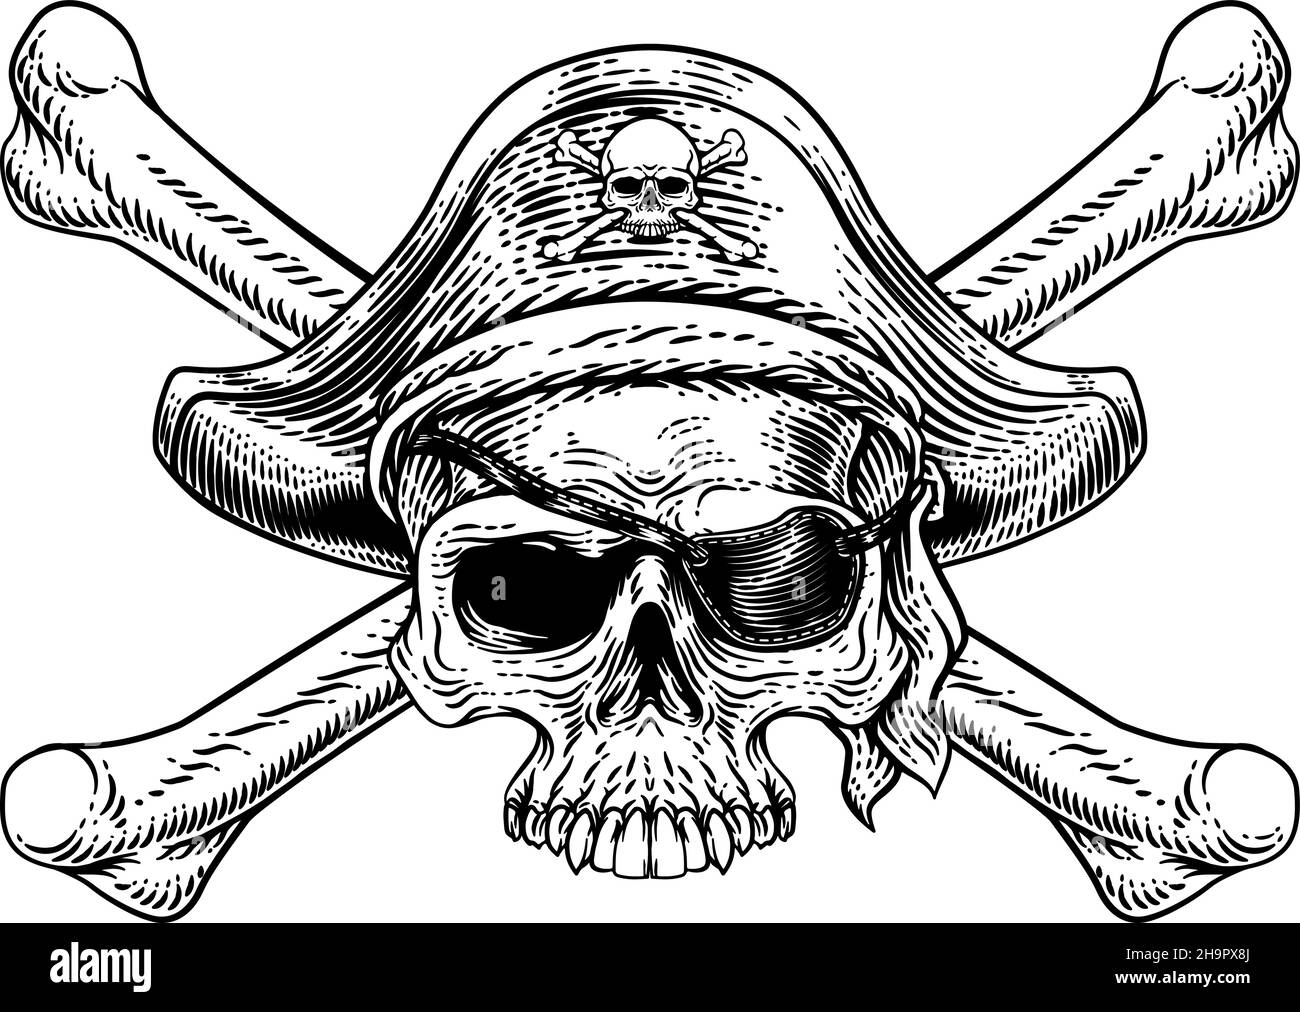 3. Realistic Pirate Skull Tattoo - wide 7